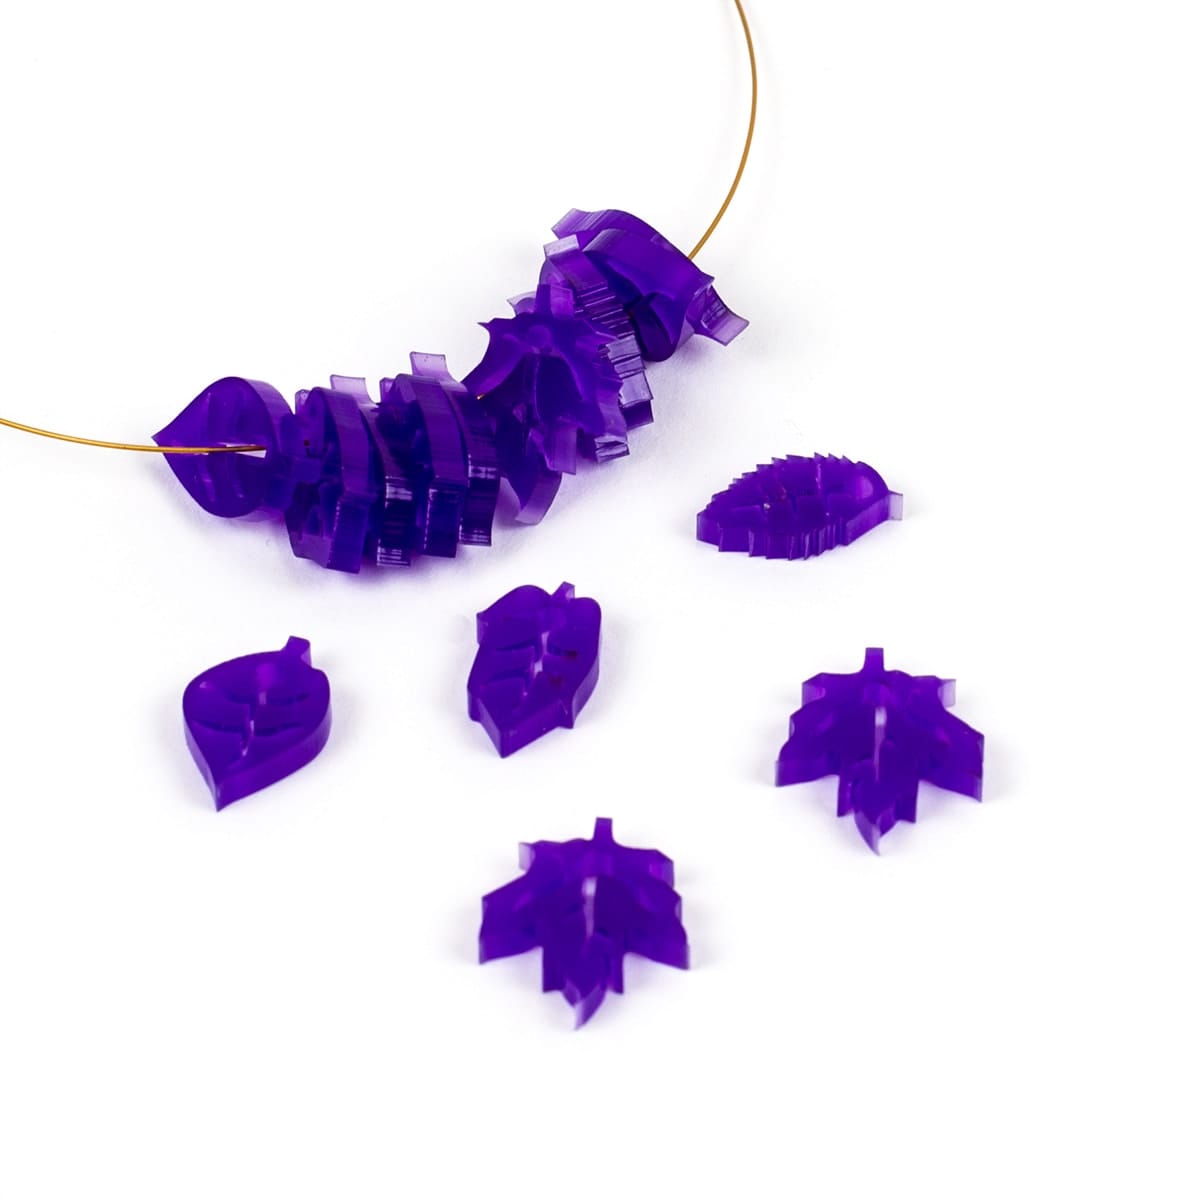 Purple Acrylic example product.